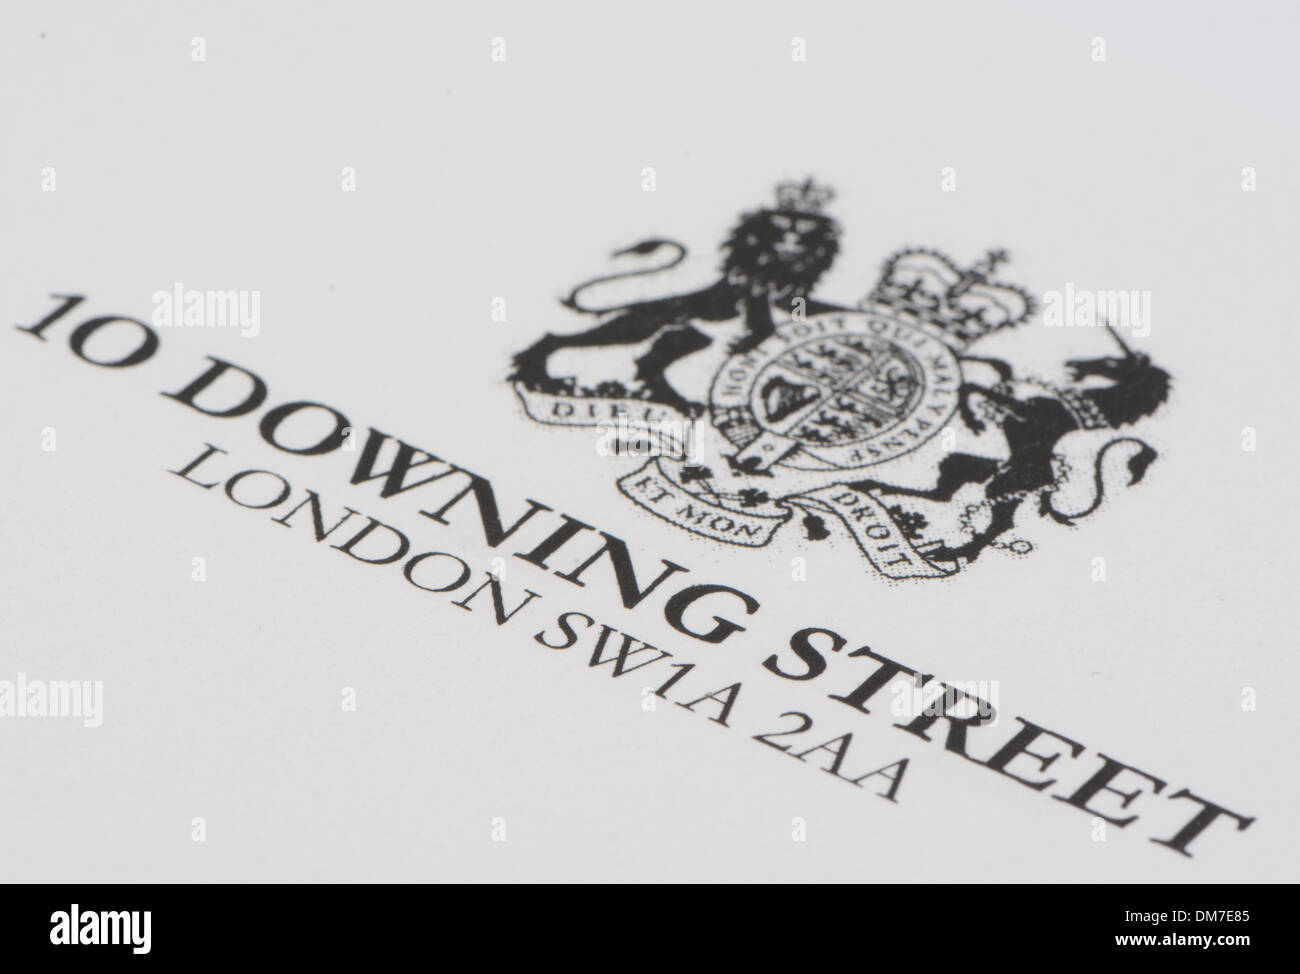 10 Downing Street Letterheaded Papier Stockfoto